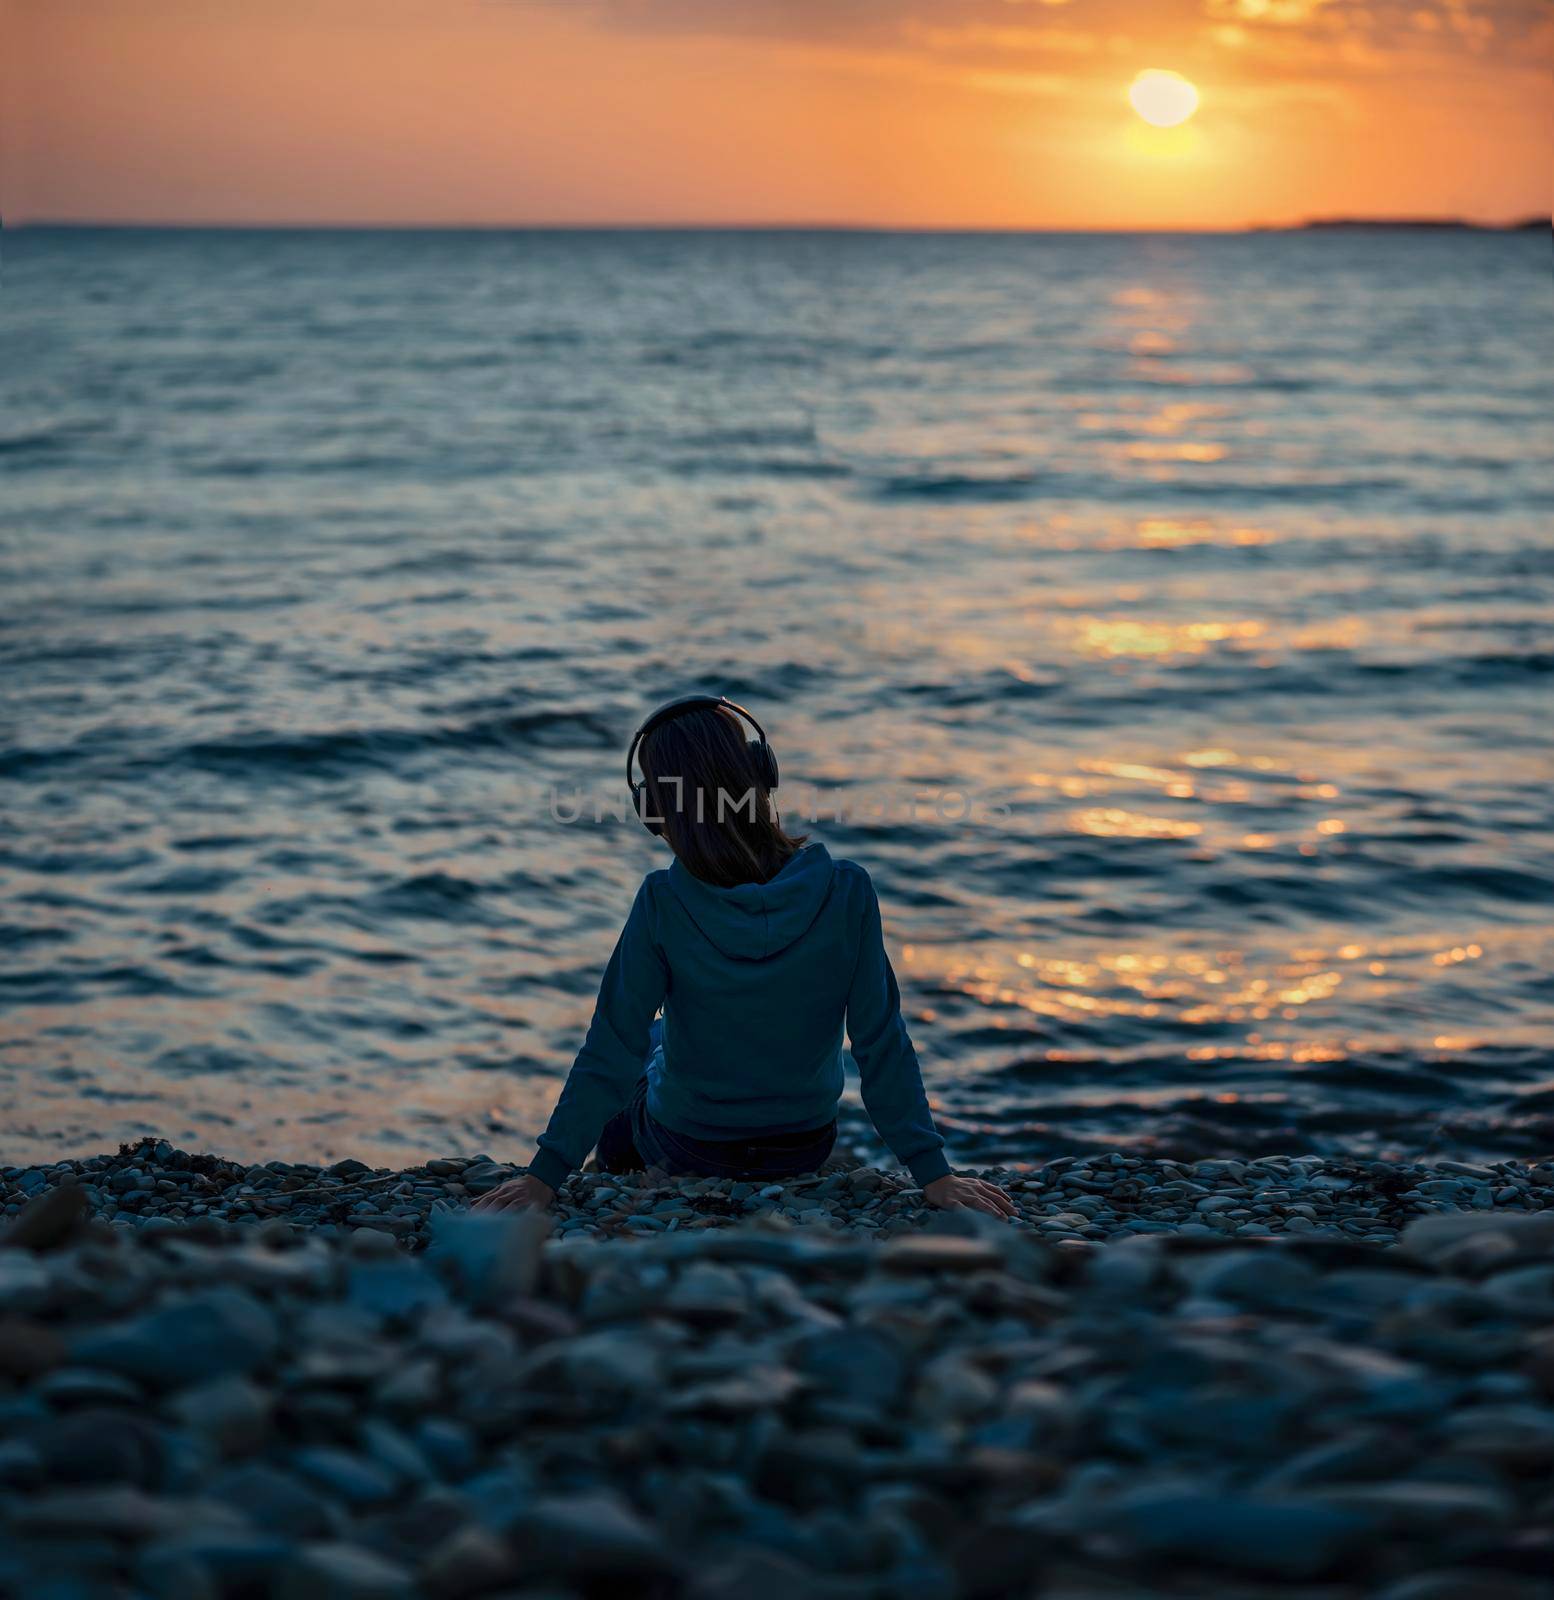 Girl in headphones sitting on beach on sunset by alexAleksei